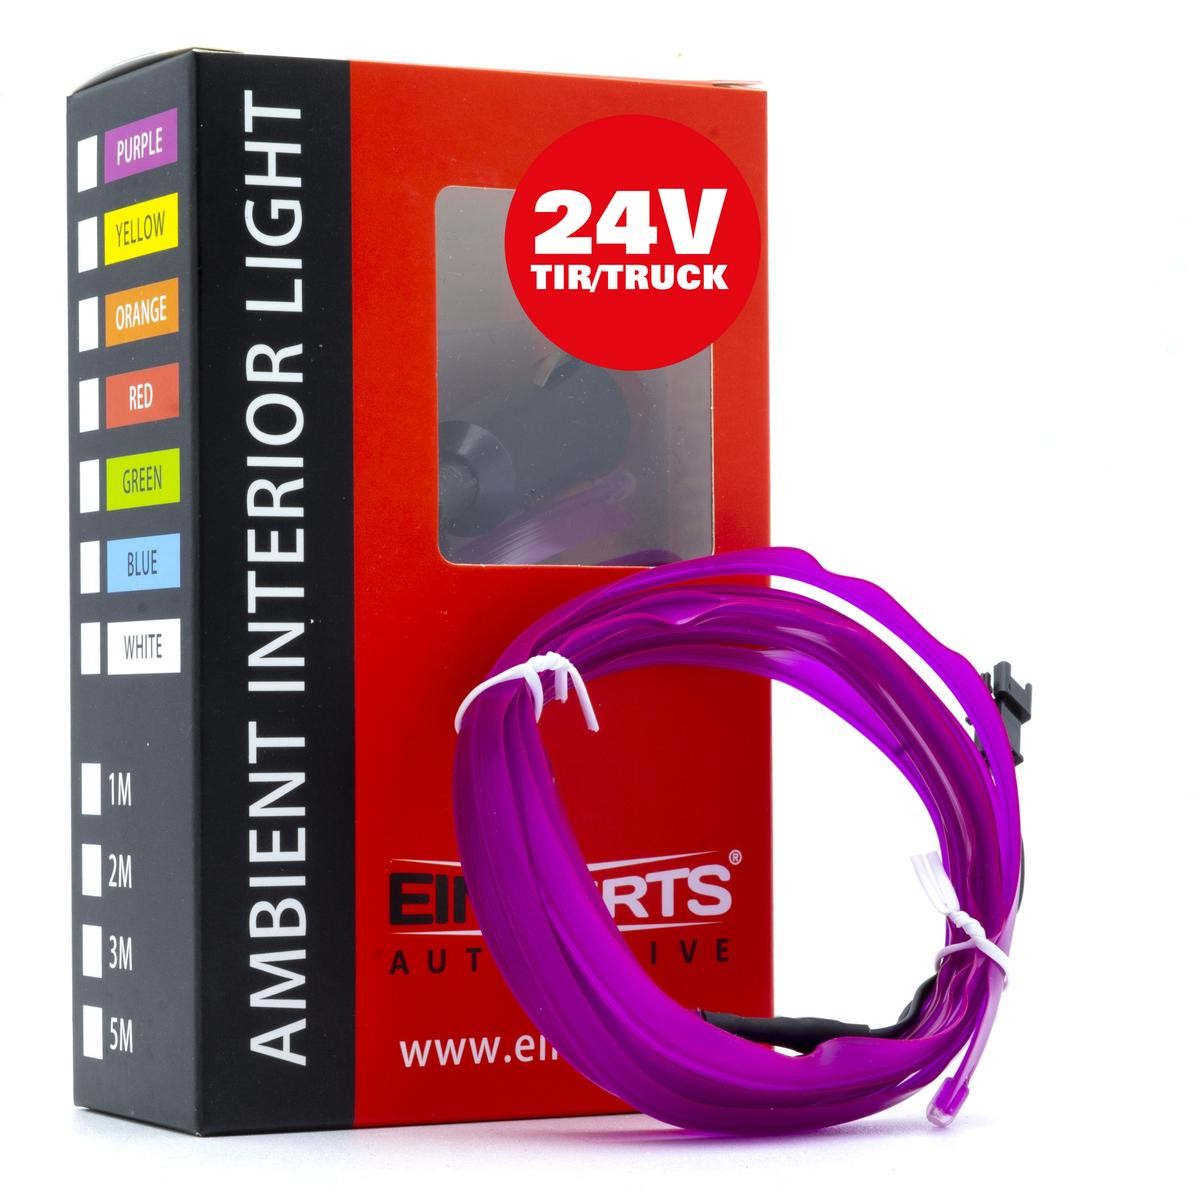 EINPARTS Interior Light EPAL2M PURPLE 24V buy